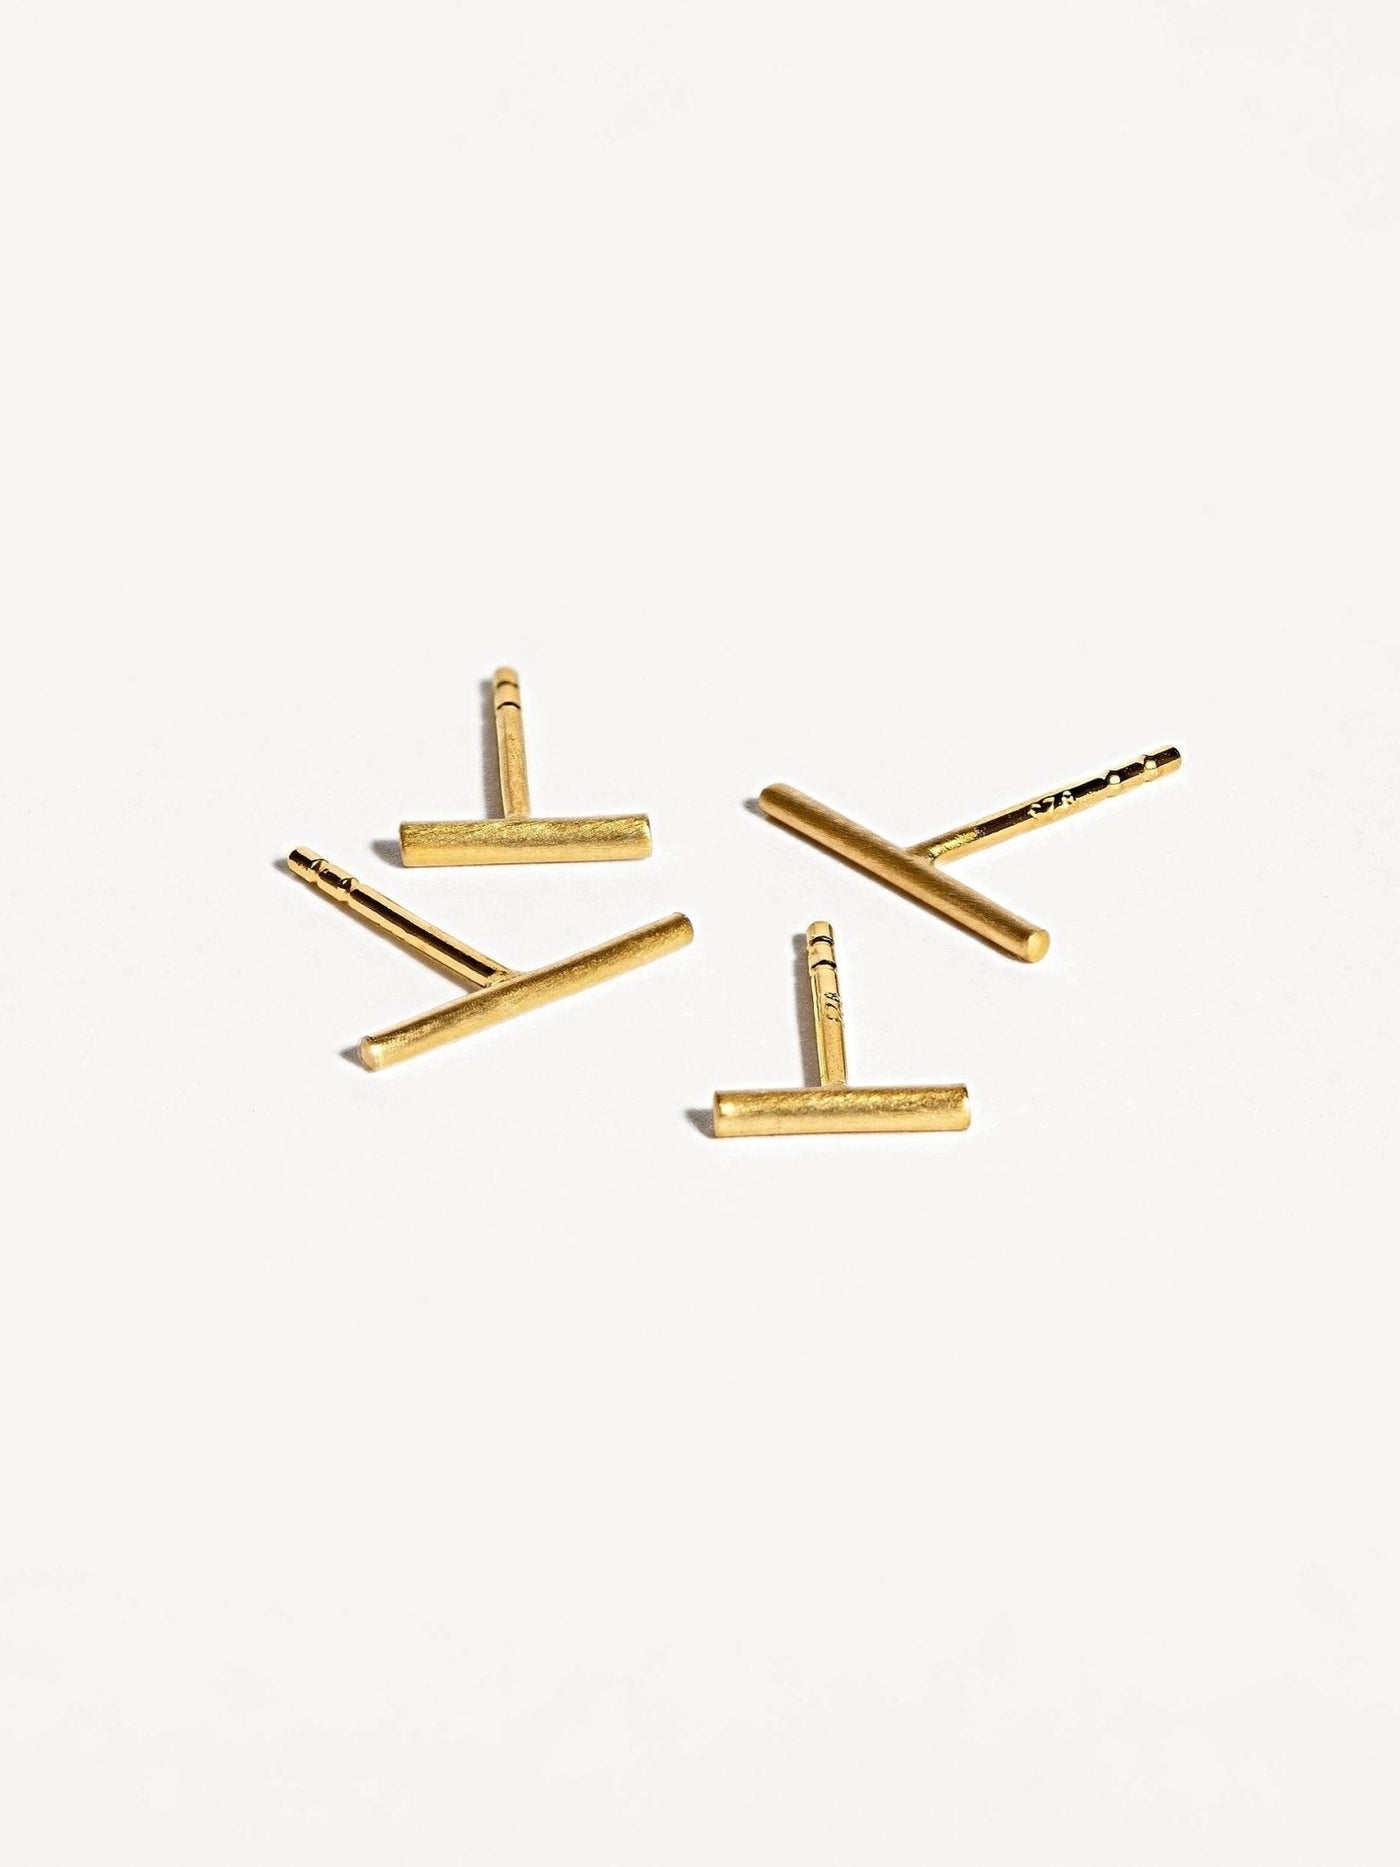 Balda Stud Earrings - 24K Gold MatteBackUpItemsBar Stud EarringsLunai Jewelry